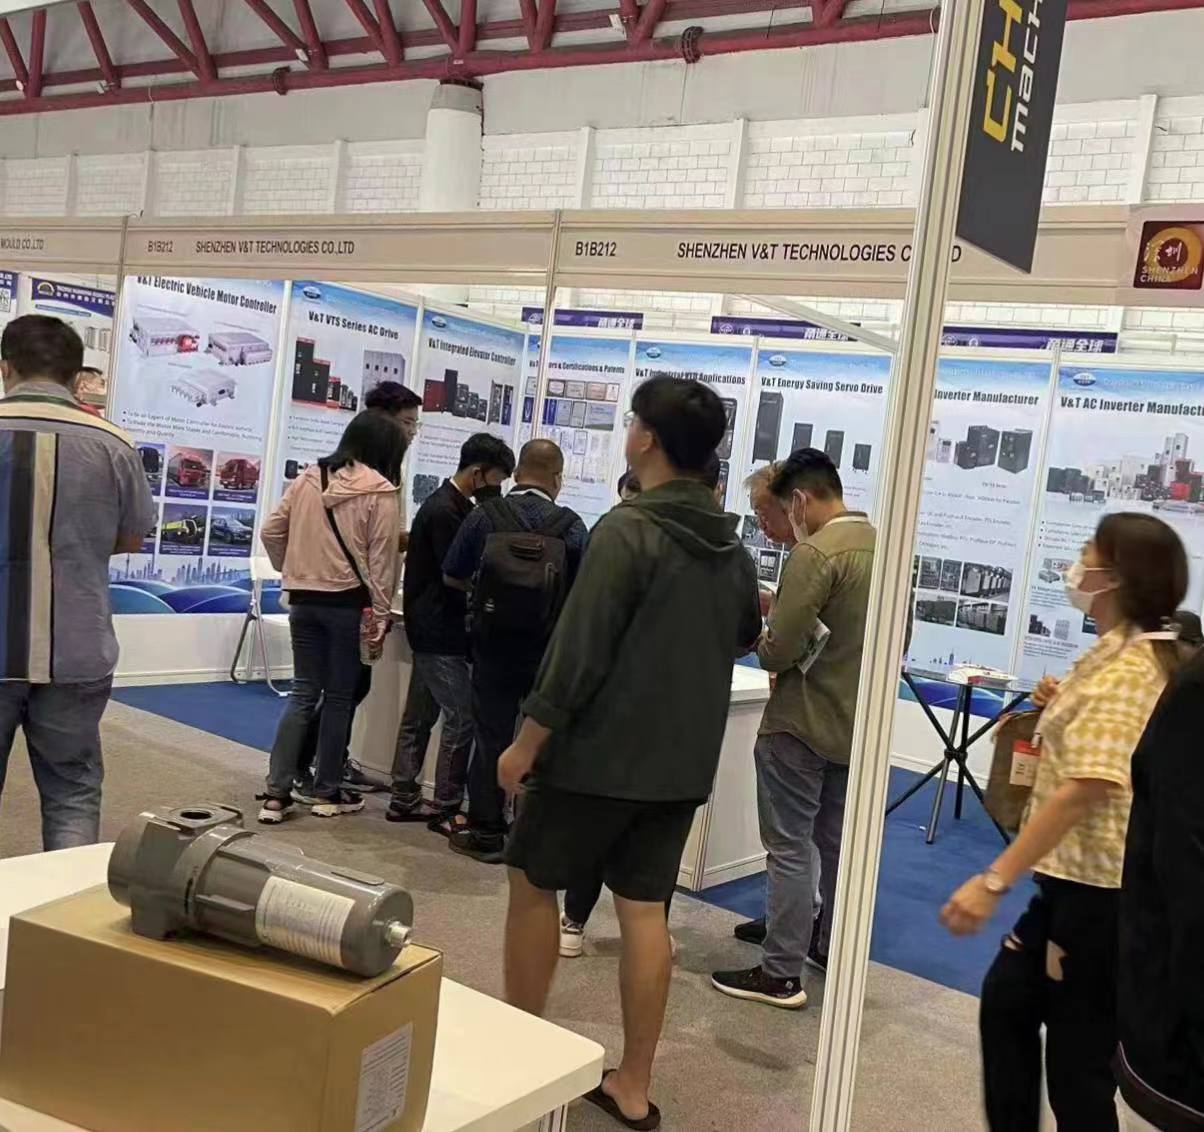 Shenzhen V&T Technologies sobresale en la exposición China Machinex en Yakarta, Indonesia